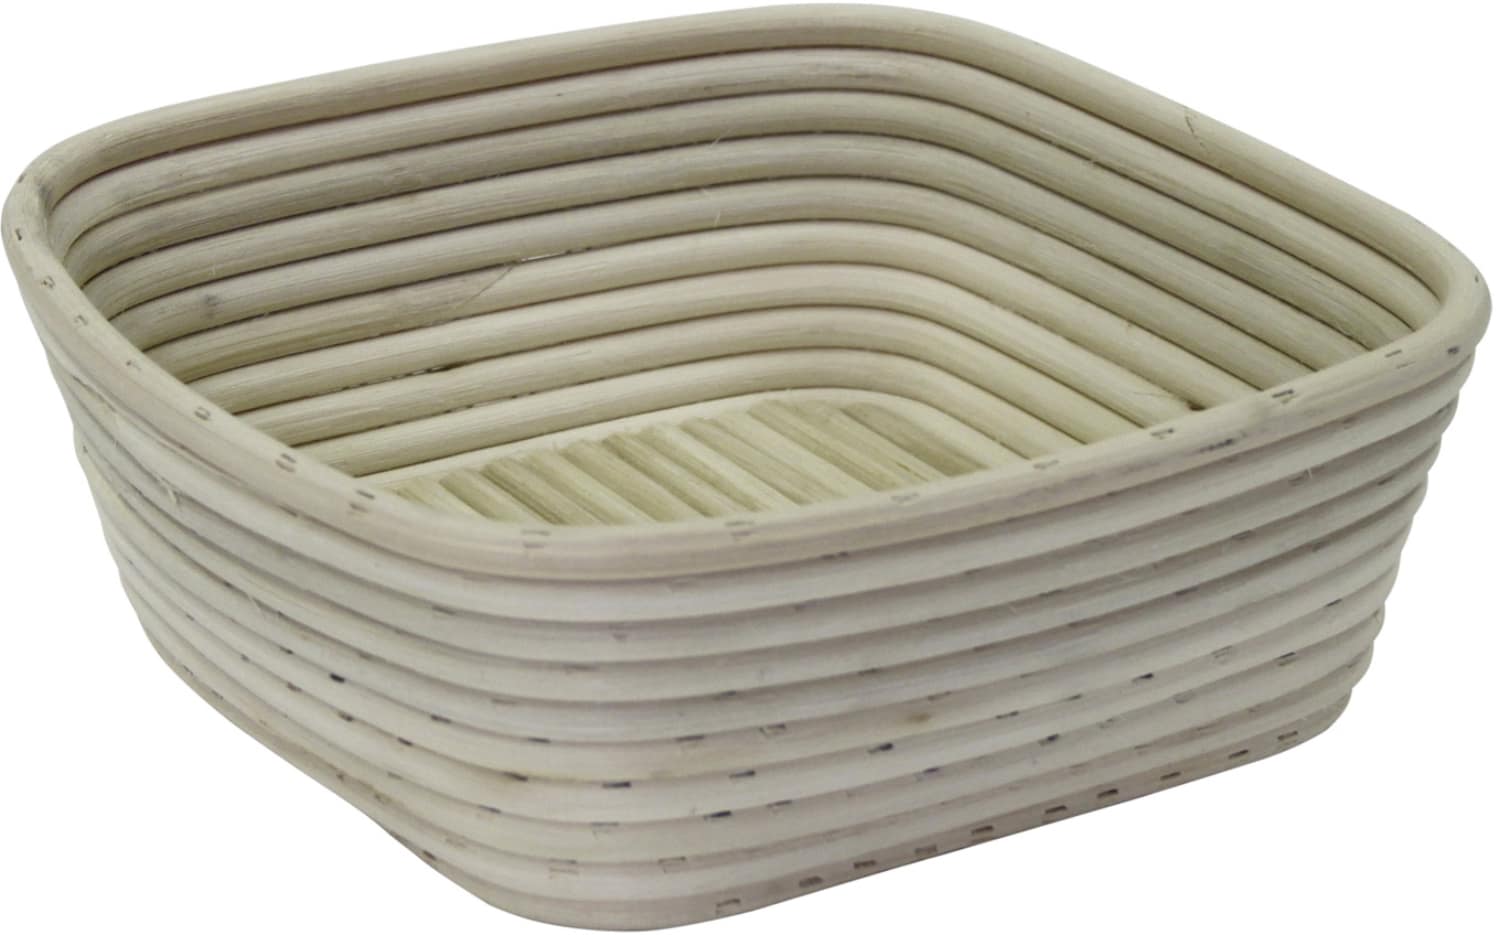 Bread proofing basket square plaited bottom